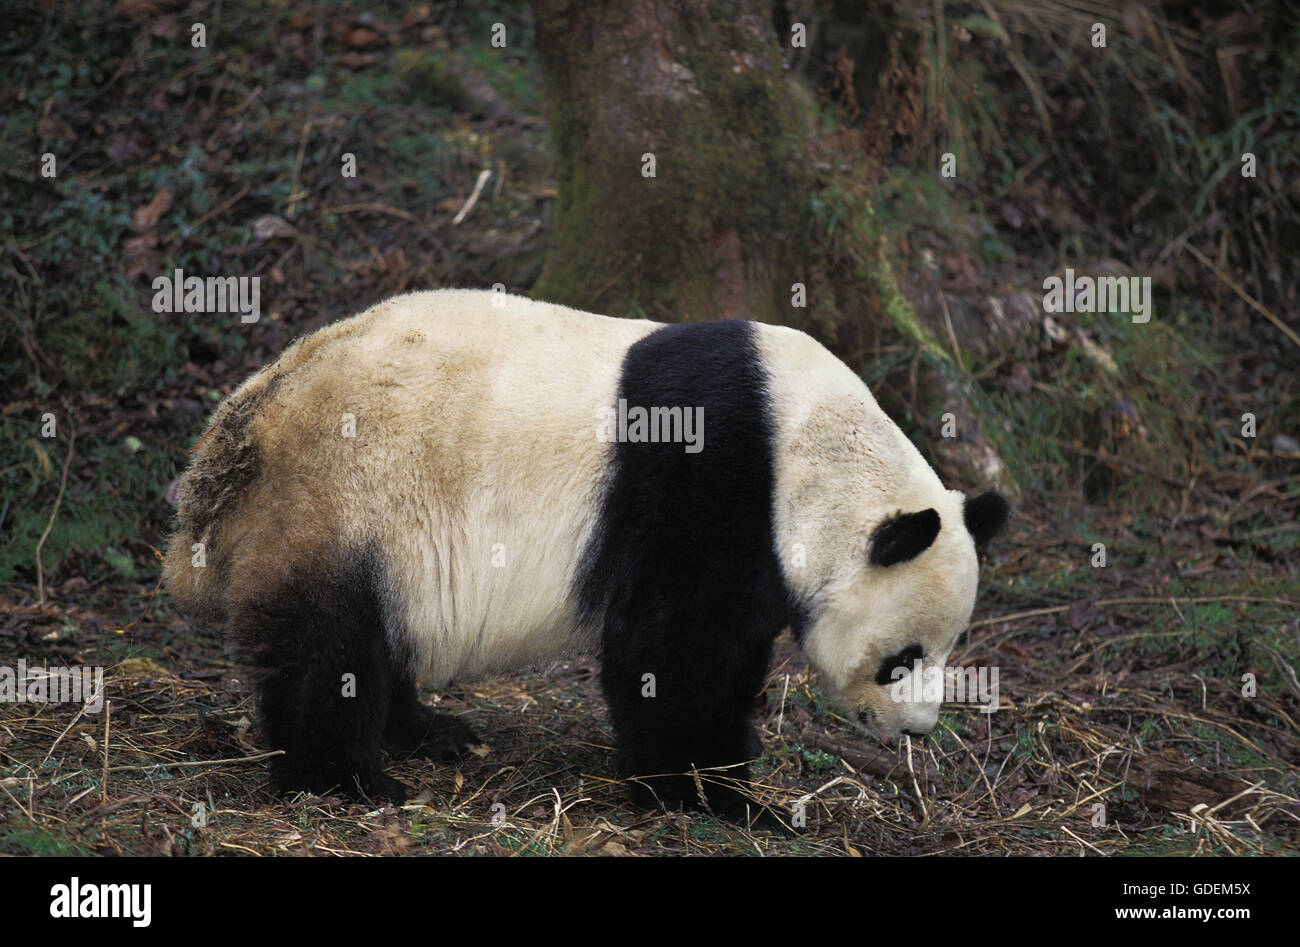 Giant Panda, ailuropoda melanoleuca, Adult, Wolong Reserve in China Stock Photo